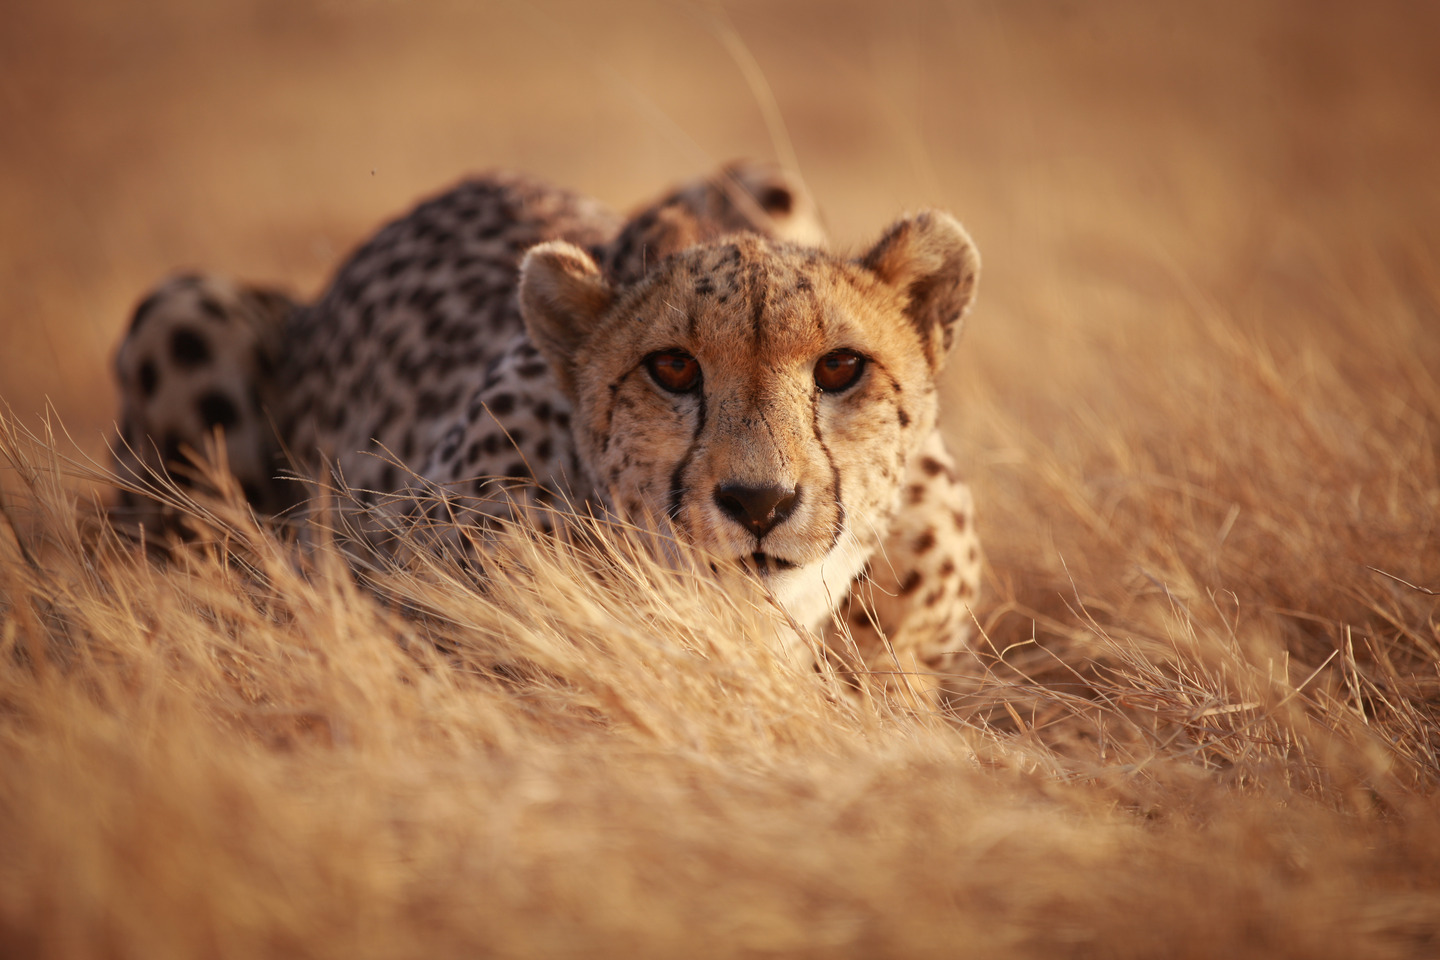 Cheetahs dont do data sharing